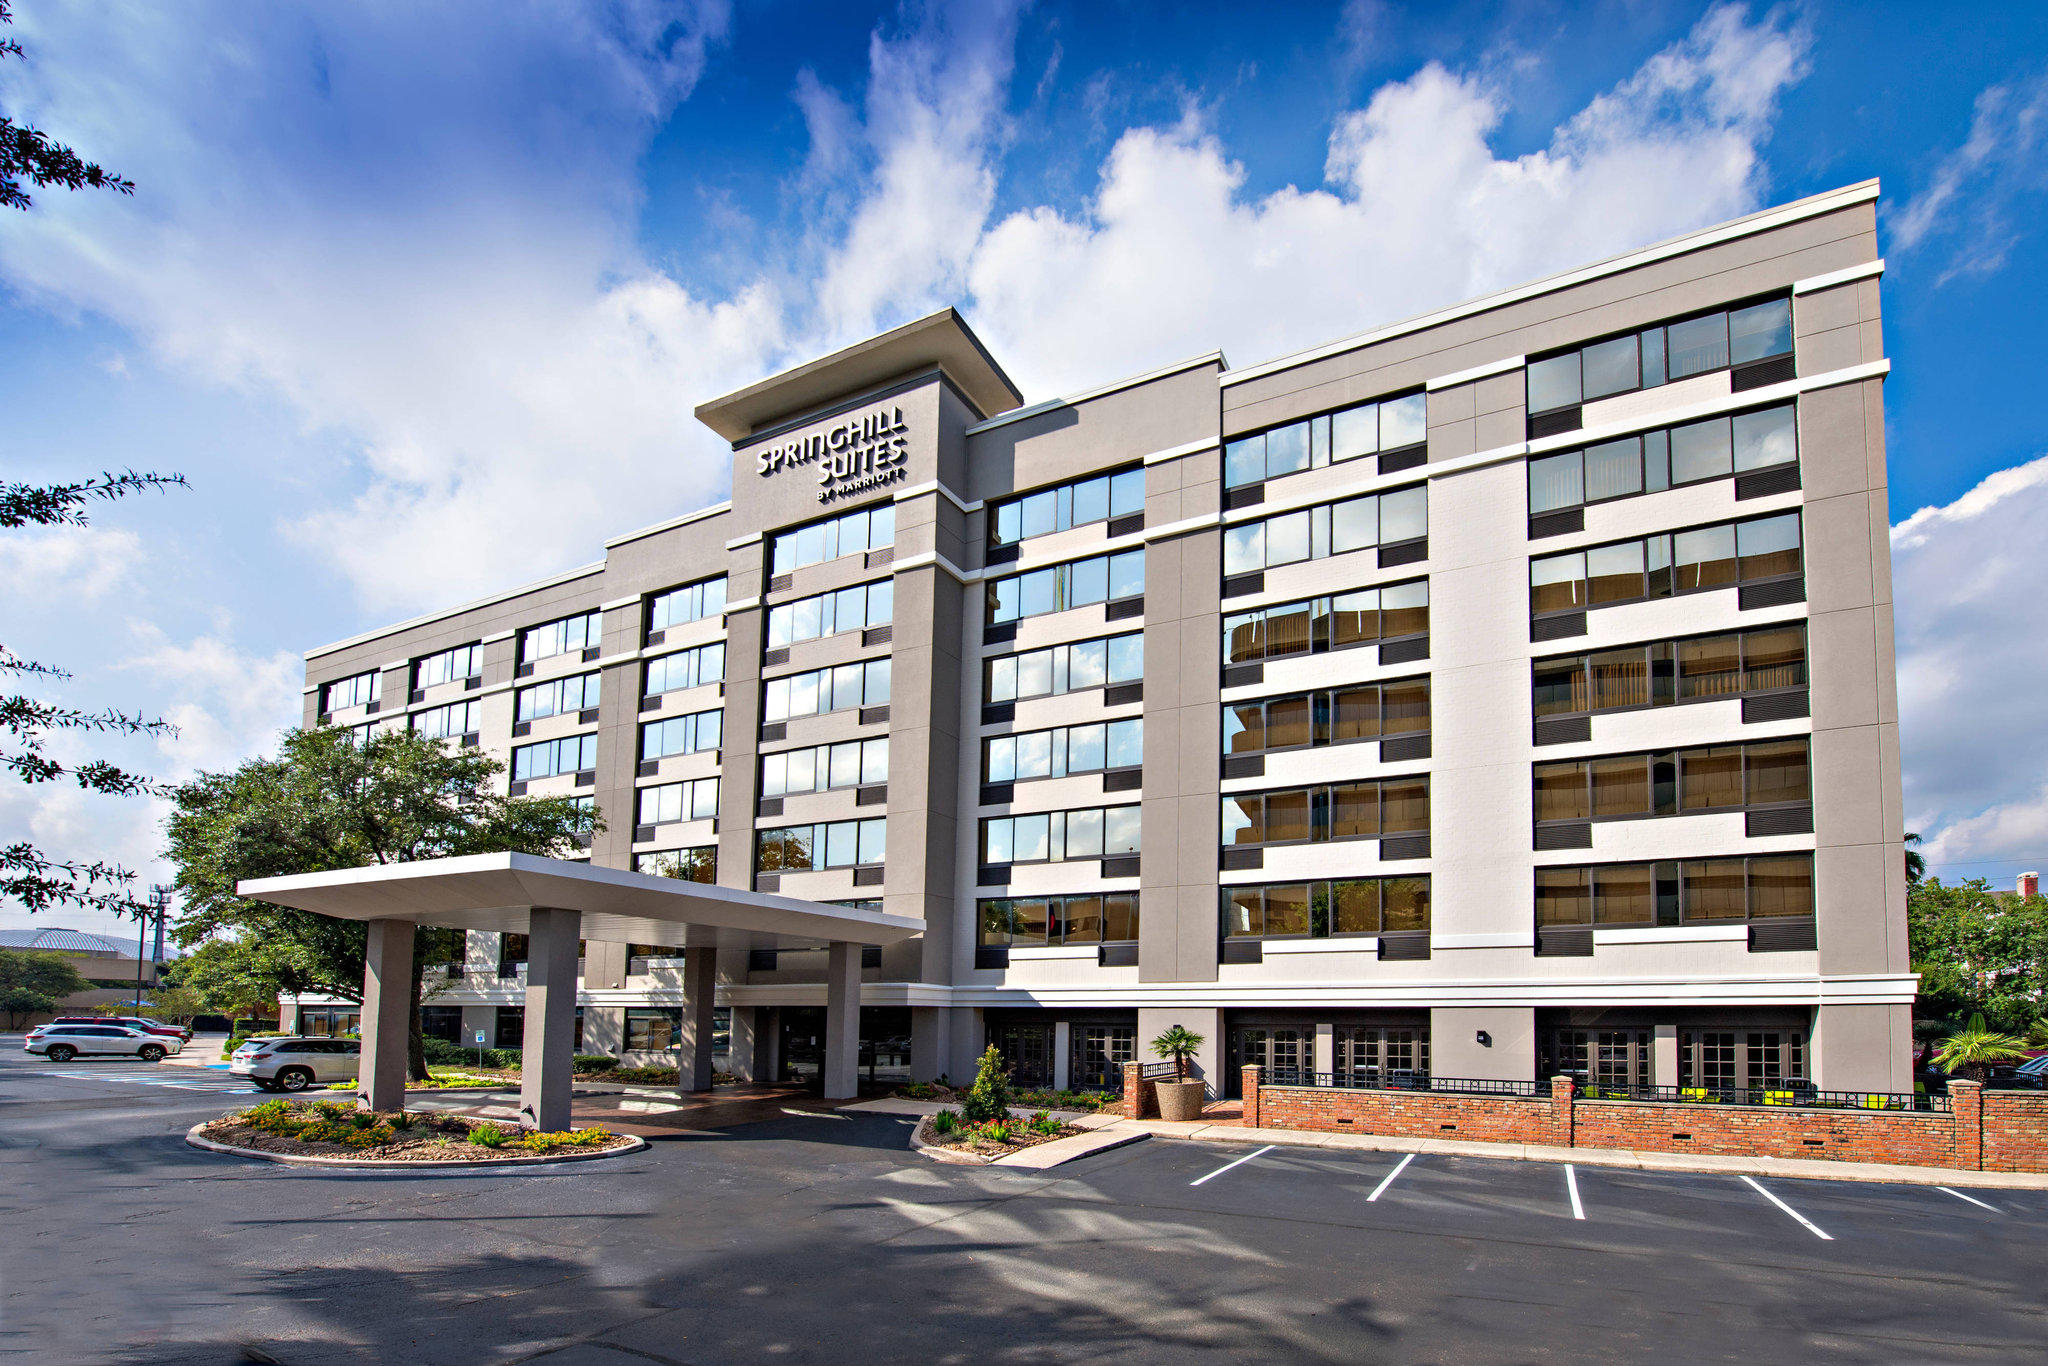 SpringHill Suites by Marriott Houston Medical Center/NRG Park